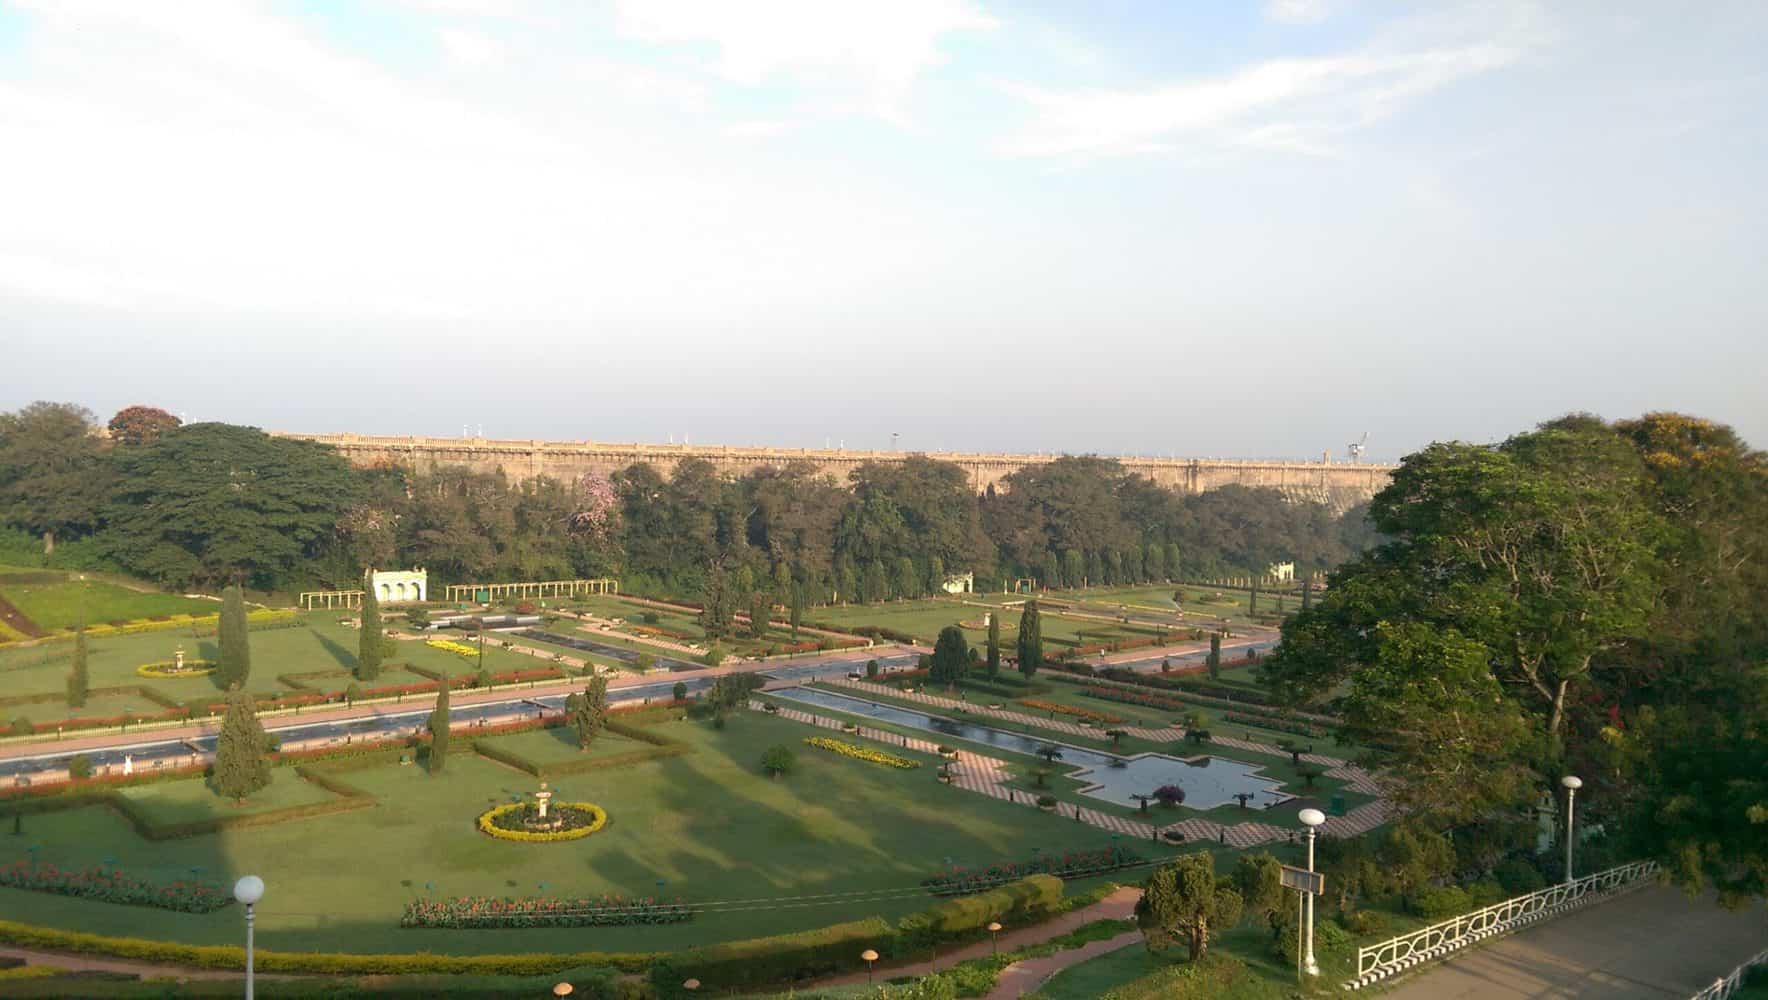 KRS Dam and Brindavan Gardens, Mysore, Karnataka